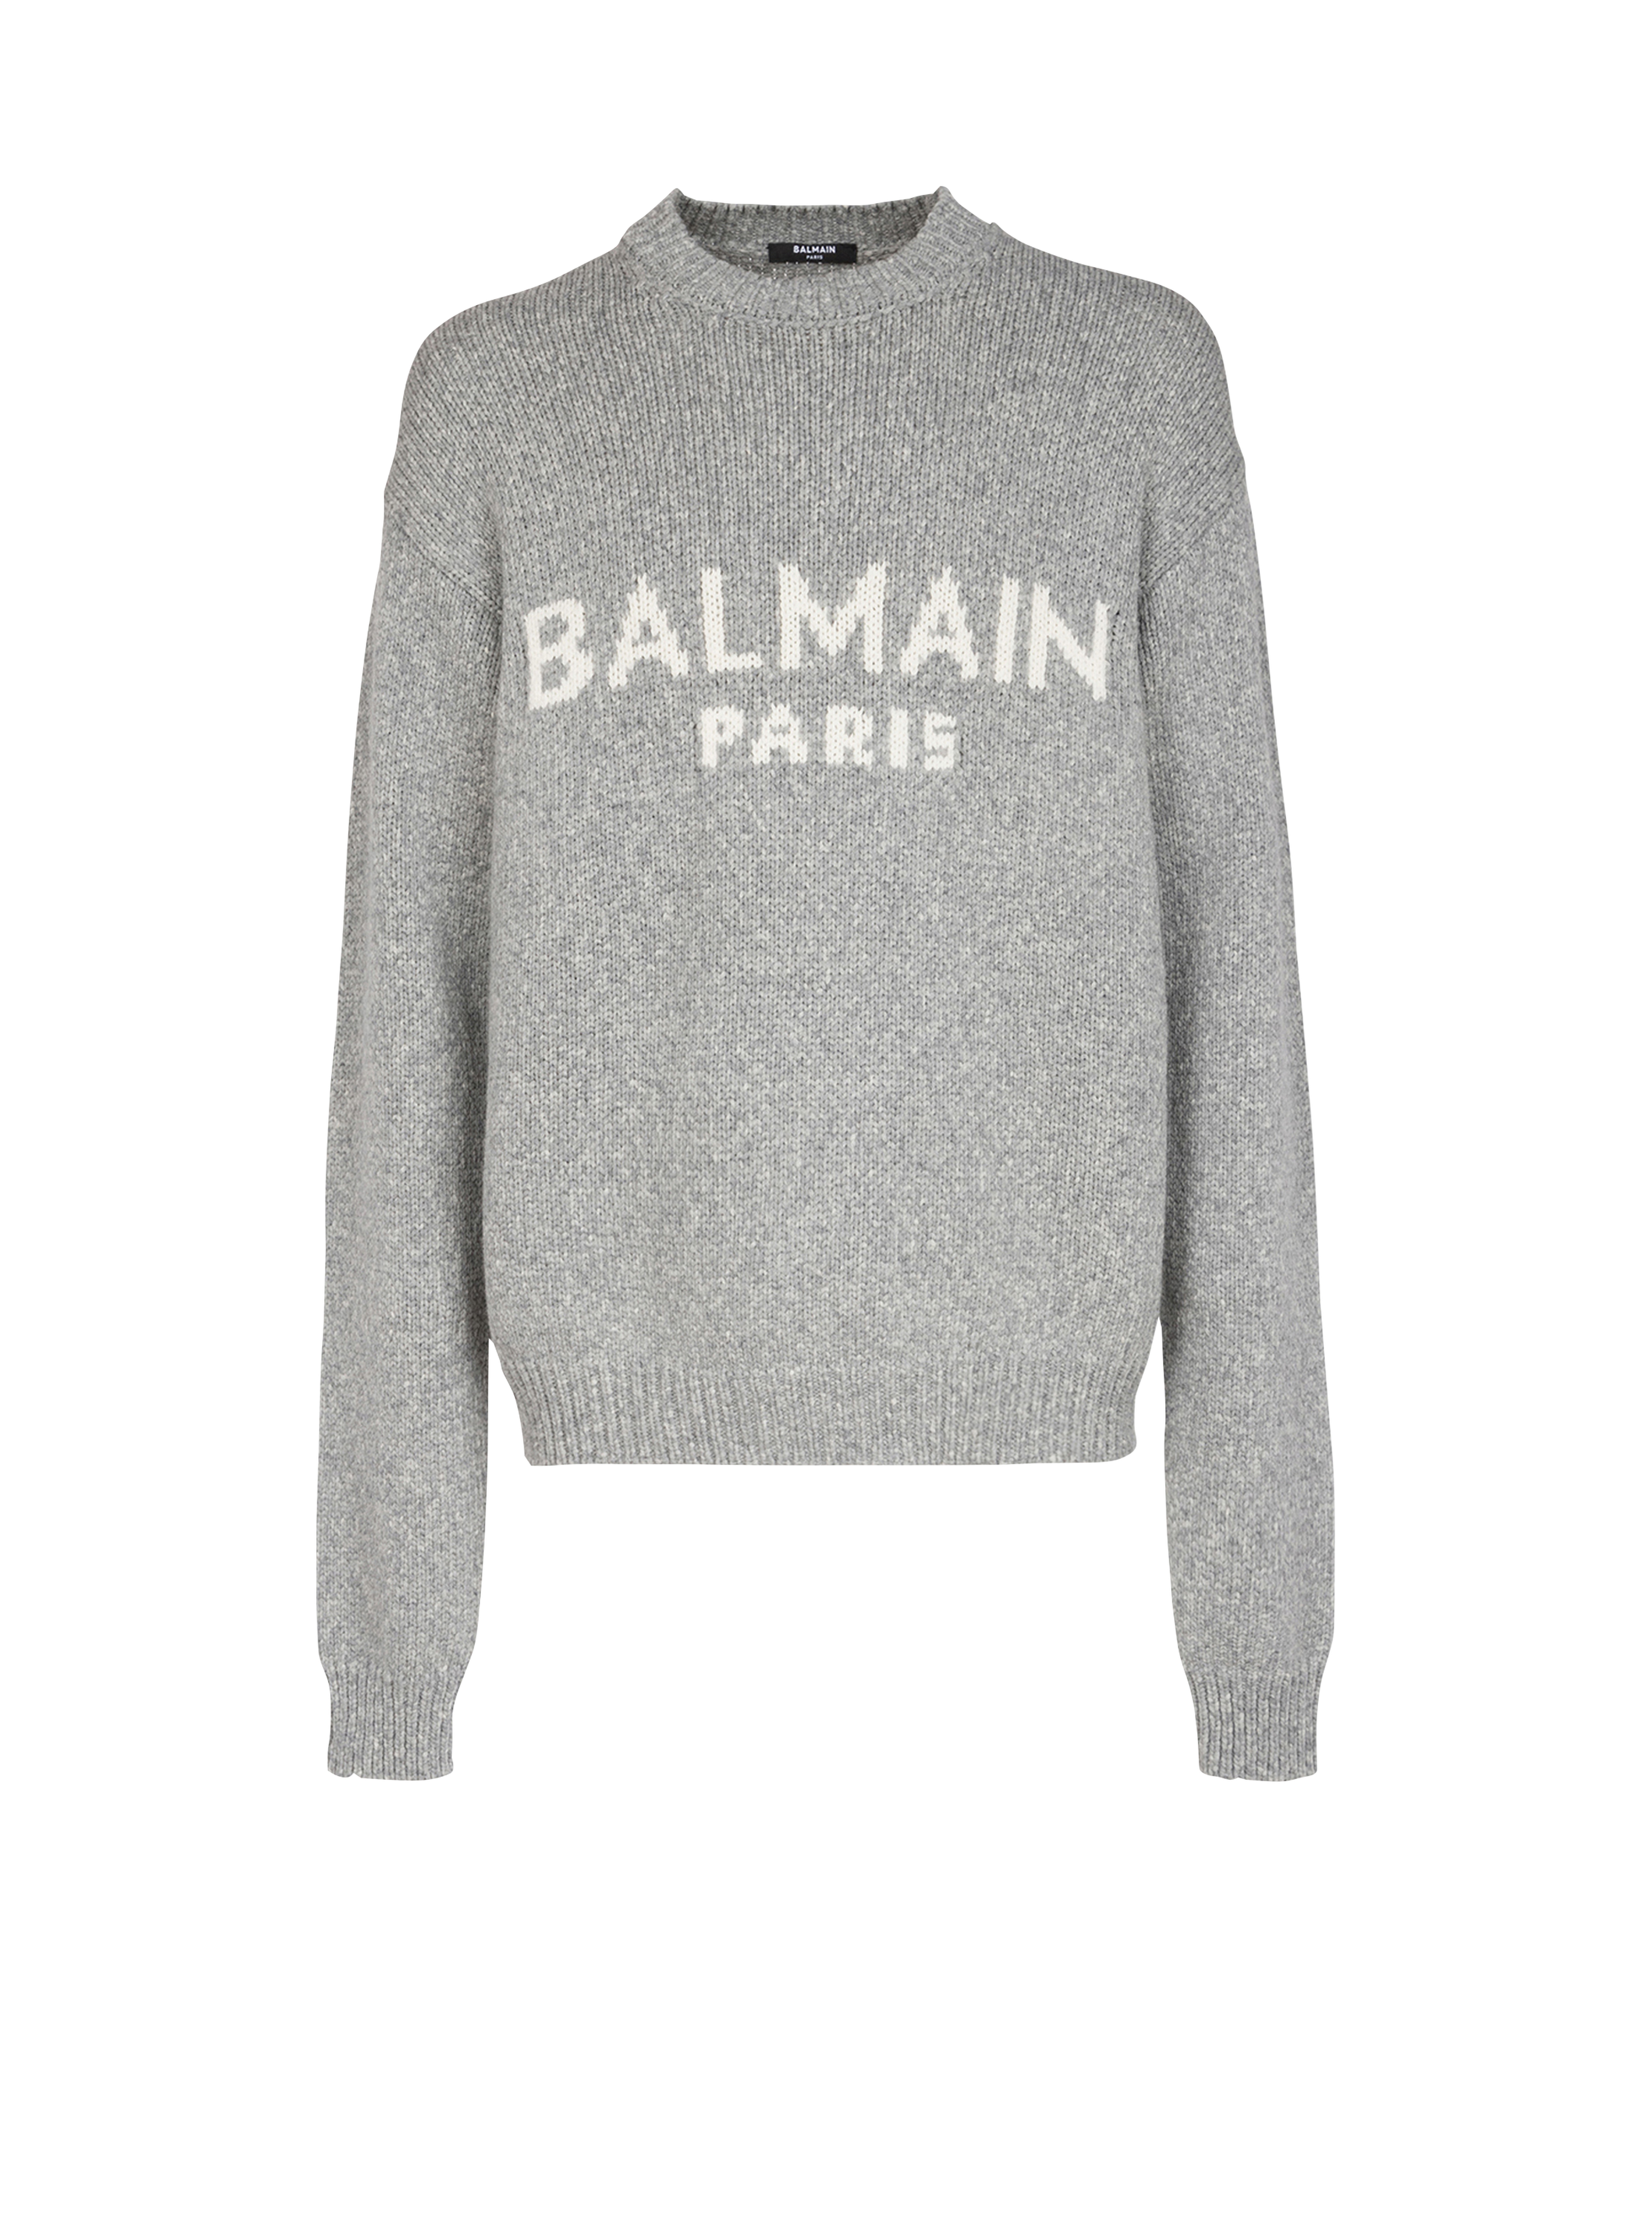 Wool sweater with Balmain Paris logo, grey